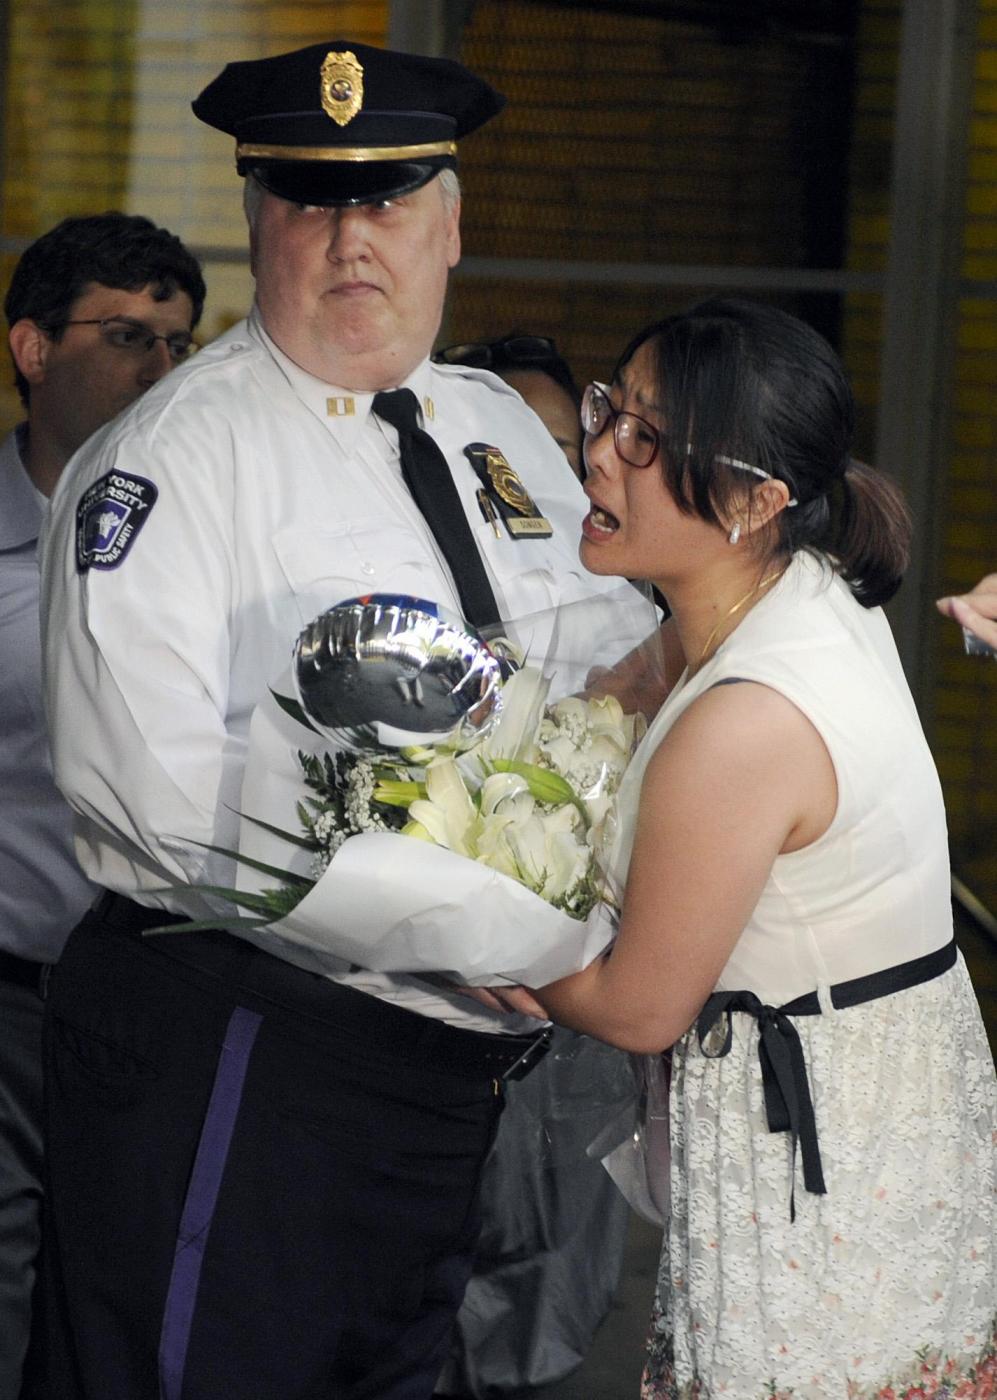 L'attivista cieco Chen Guangcheng arriva a New York05